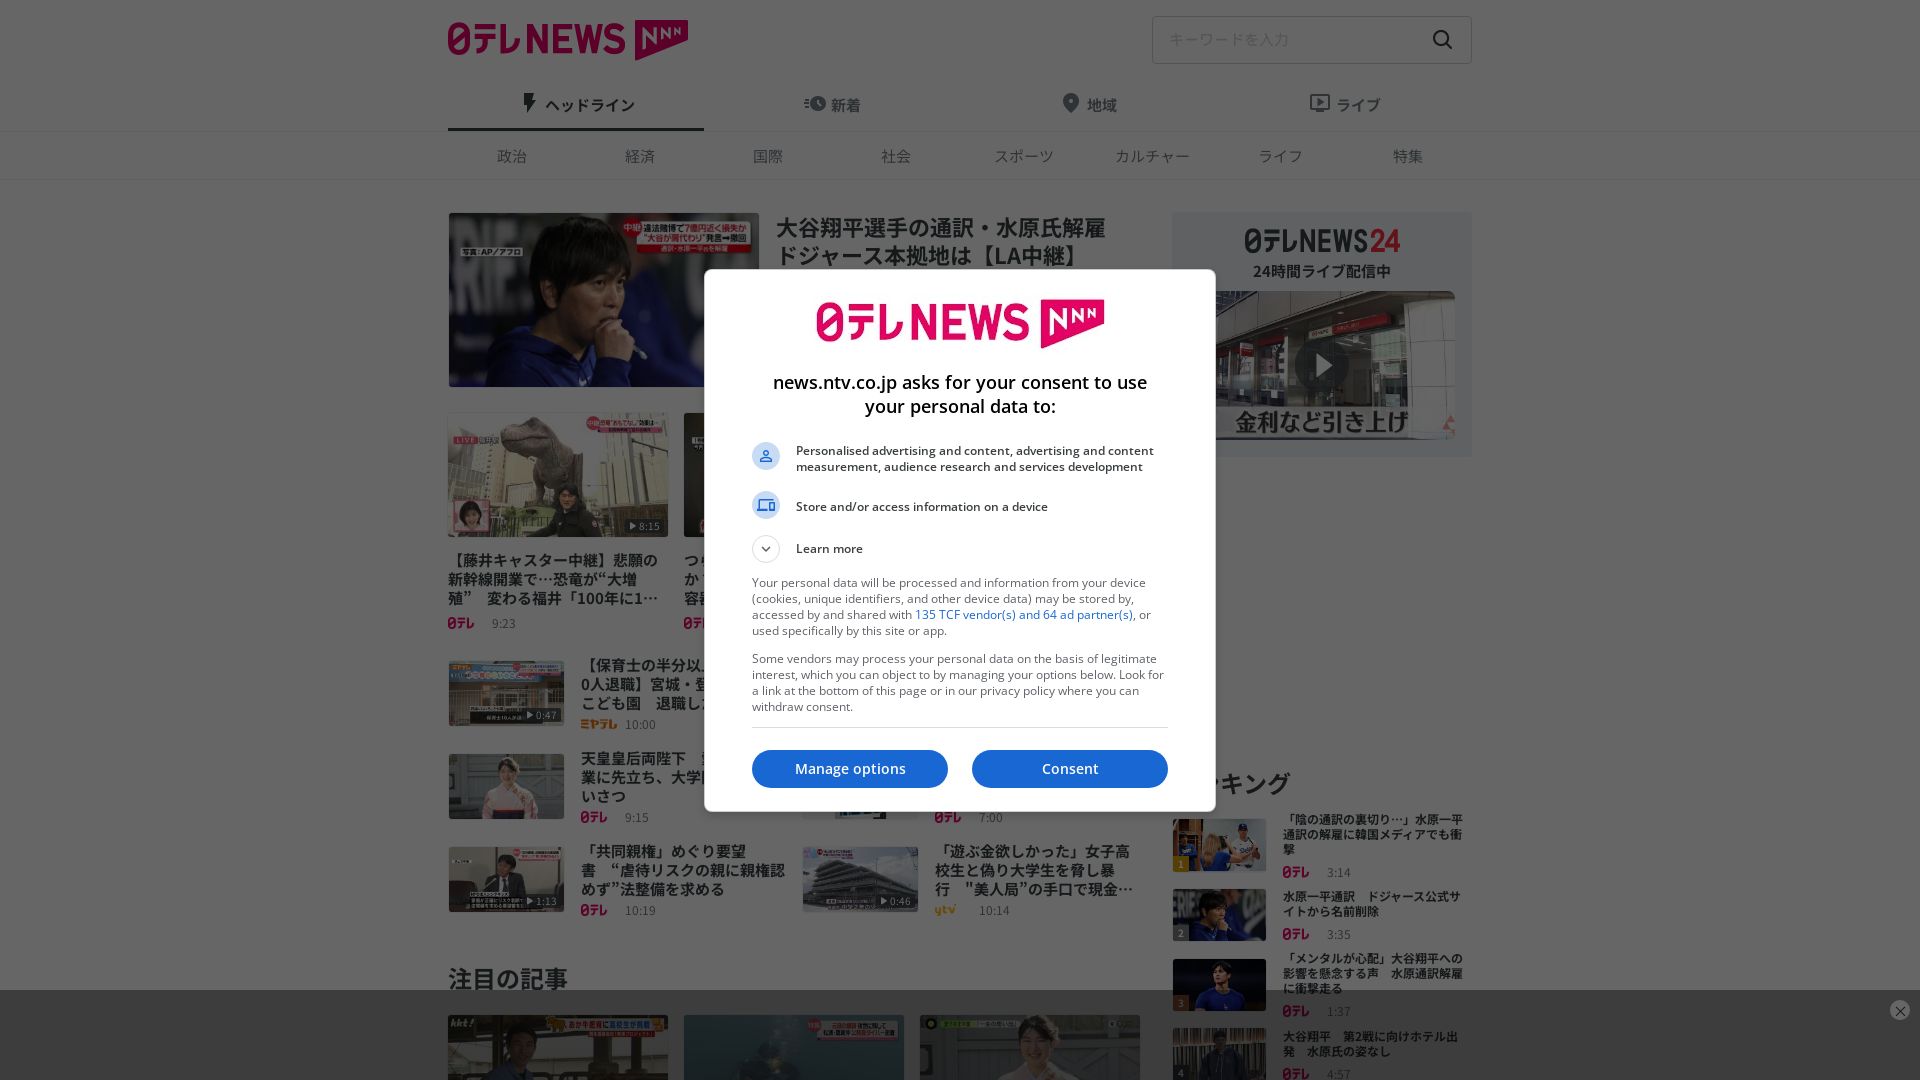 Webseitenstatus news24.jp ist   ONLINE